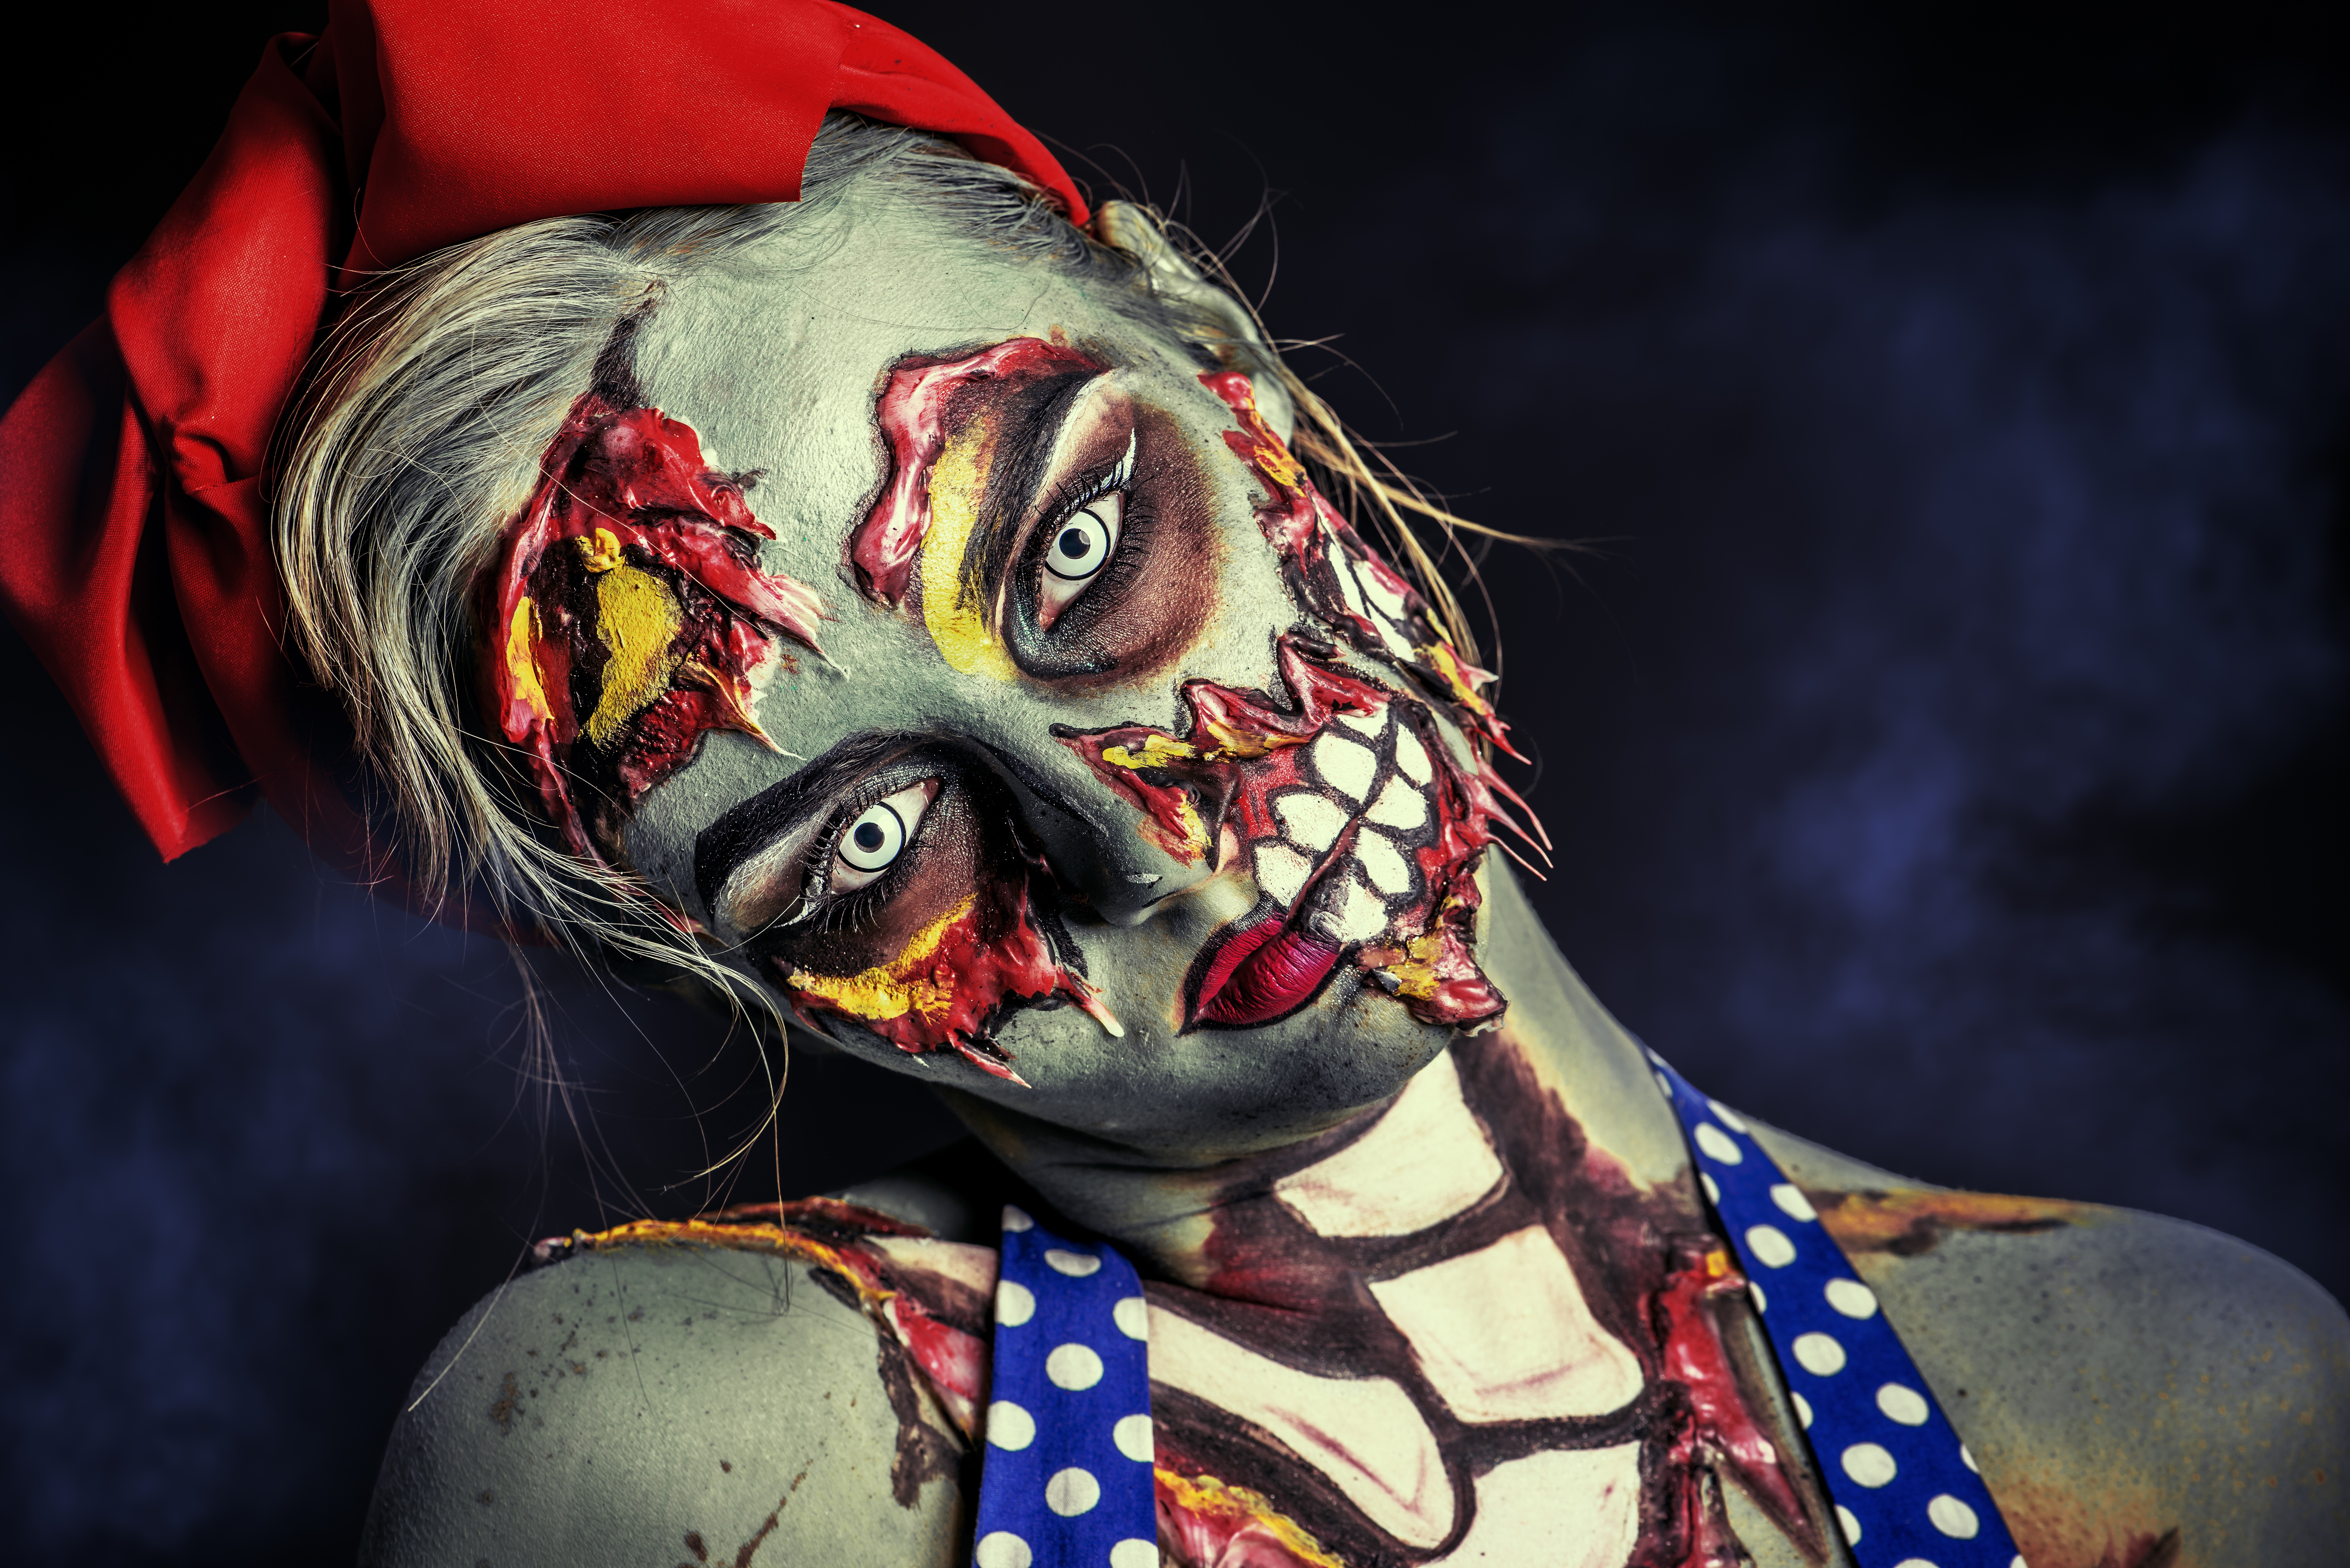 Zastaki.com - Молодая девушка с гримом зомби на Хэллоуин